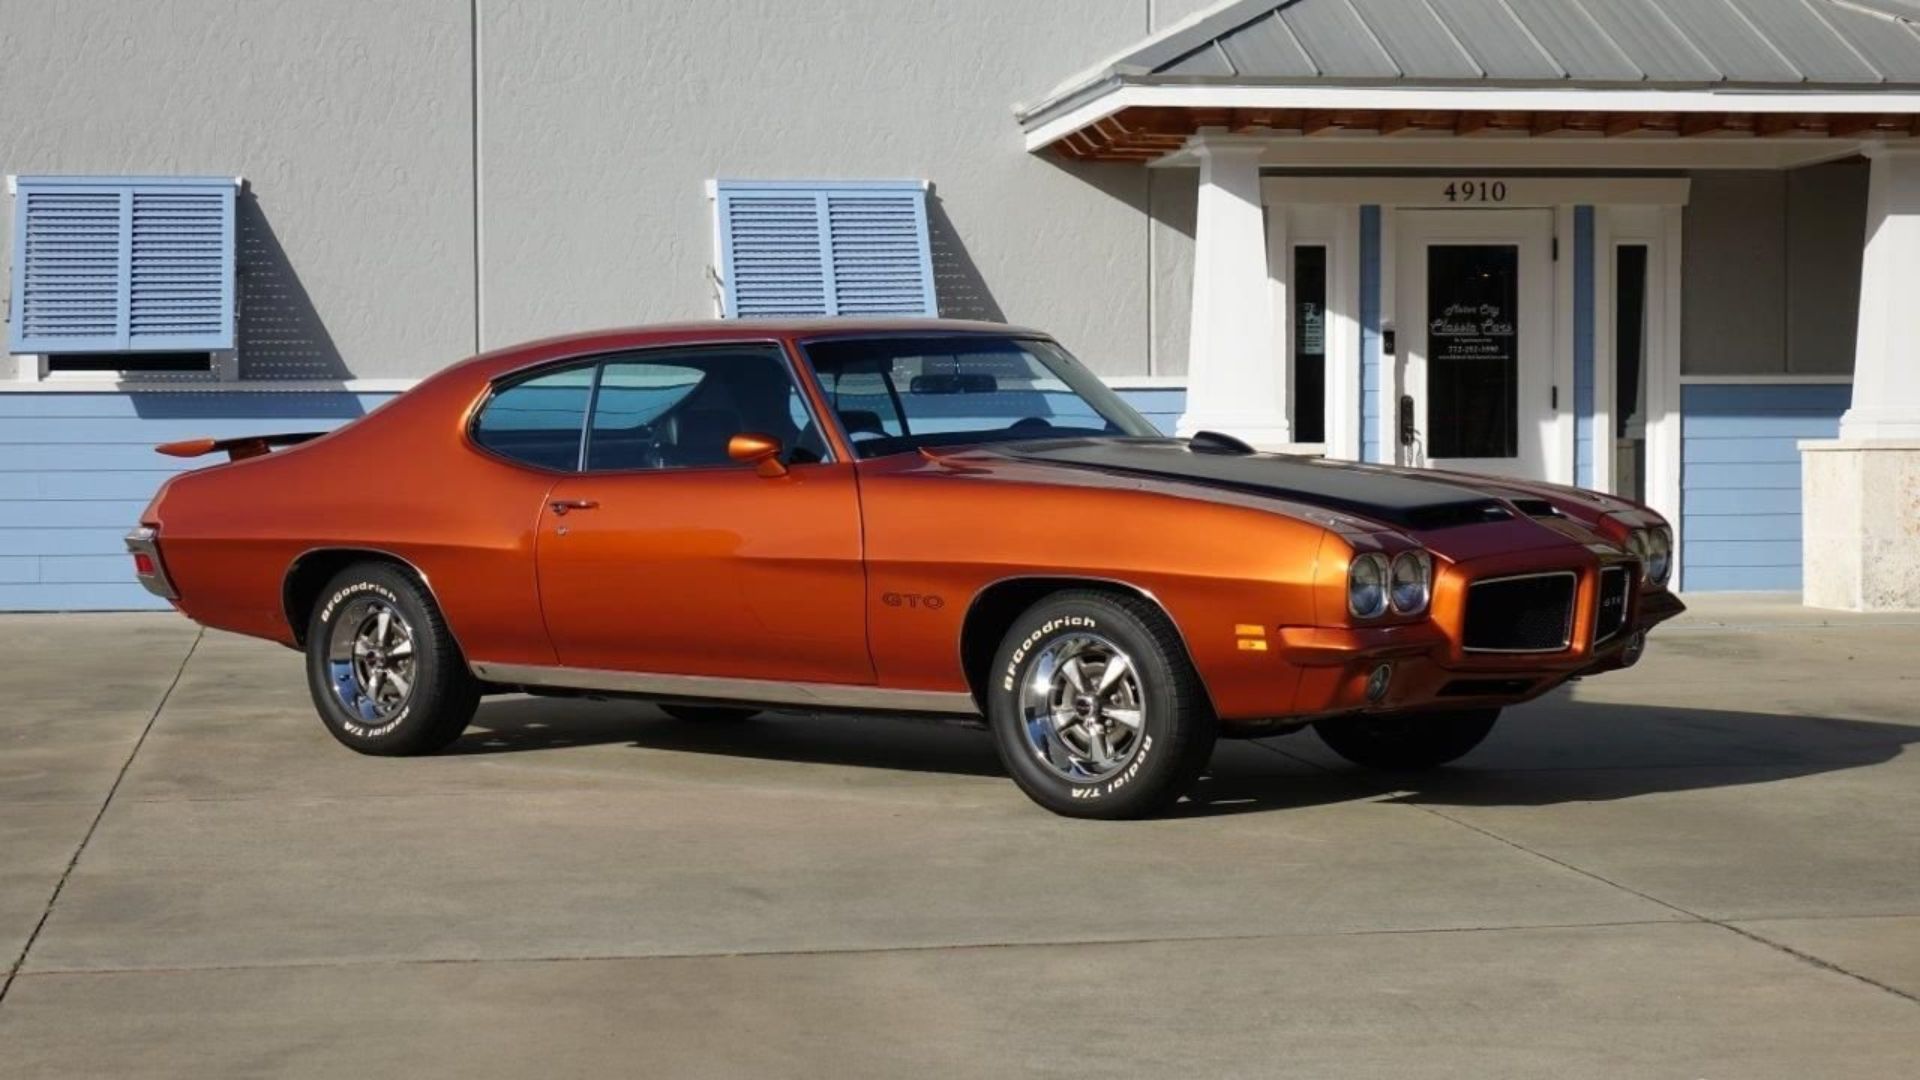 Fully Restored 1971 Pontiac GTO Seeks To Thrill 